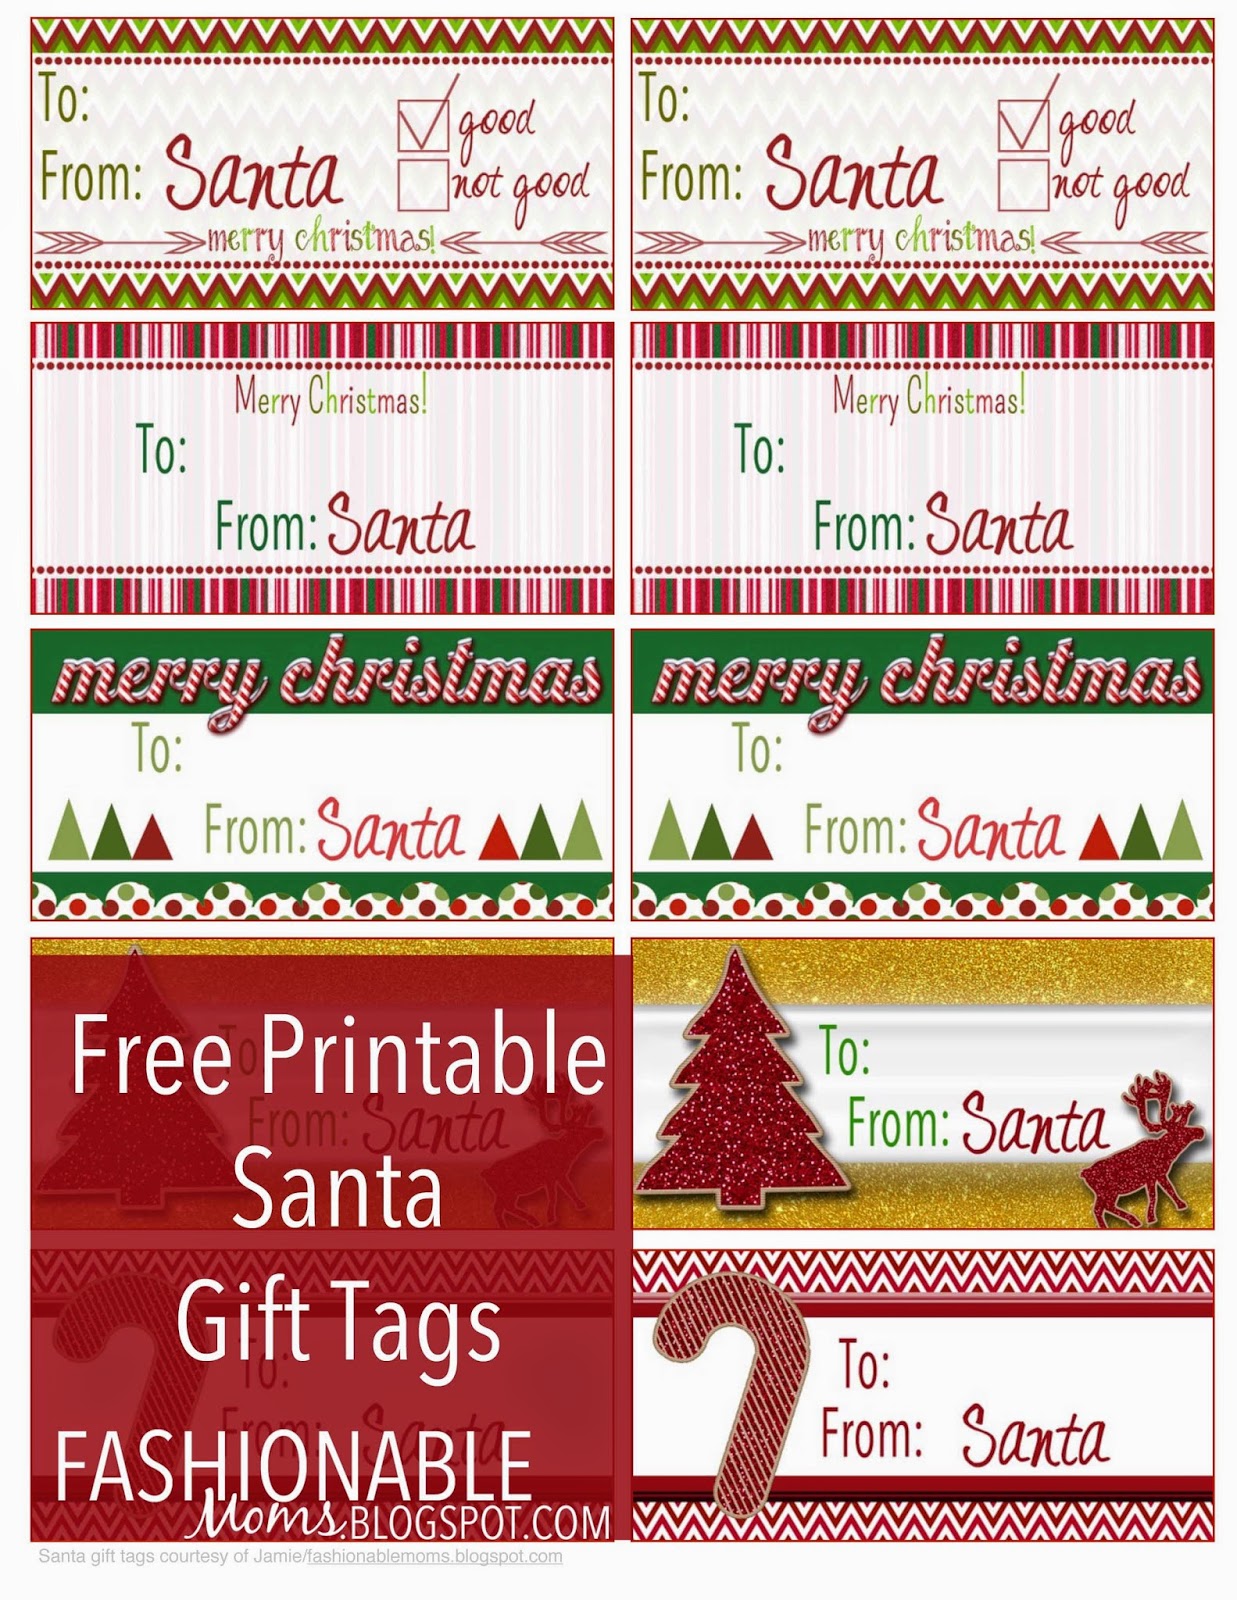 My Fashionable Designs Free Printable Santa Gift Tags